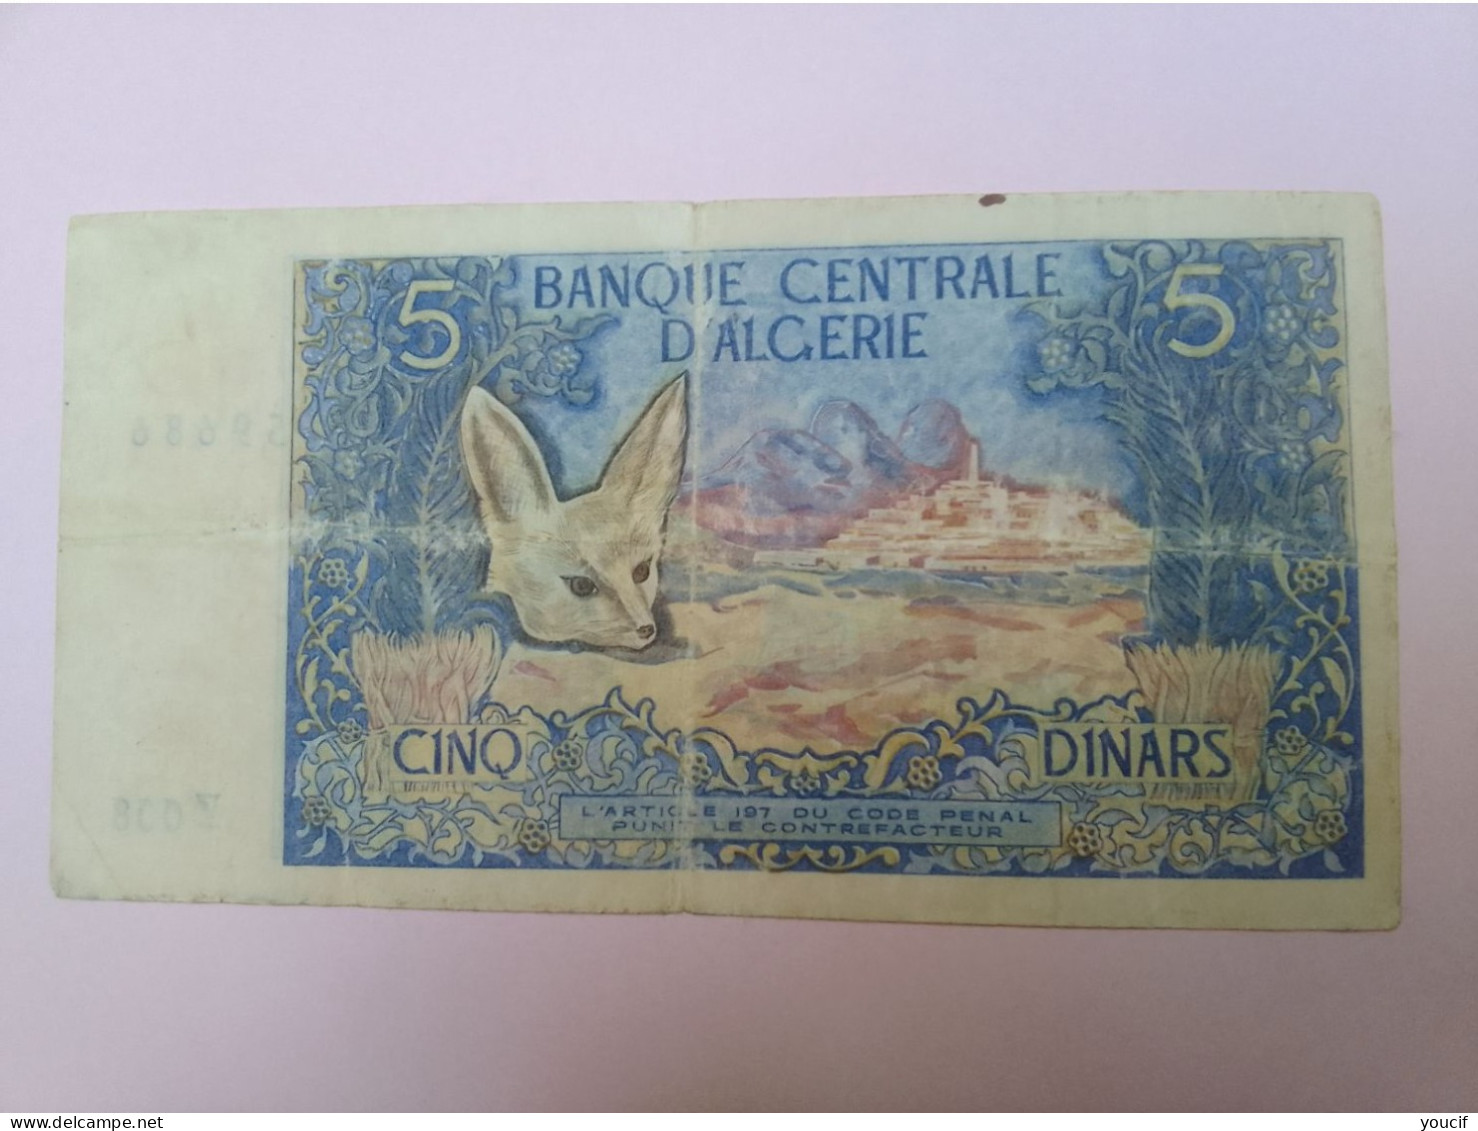 Billet De Banque D Algerie 5 Dinars Du 1 Novembre 1970 - Algeria